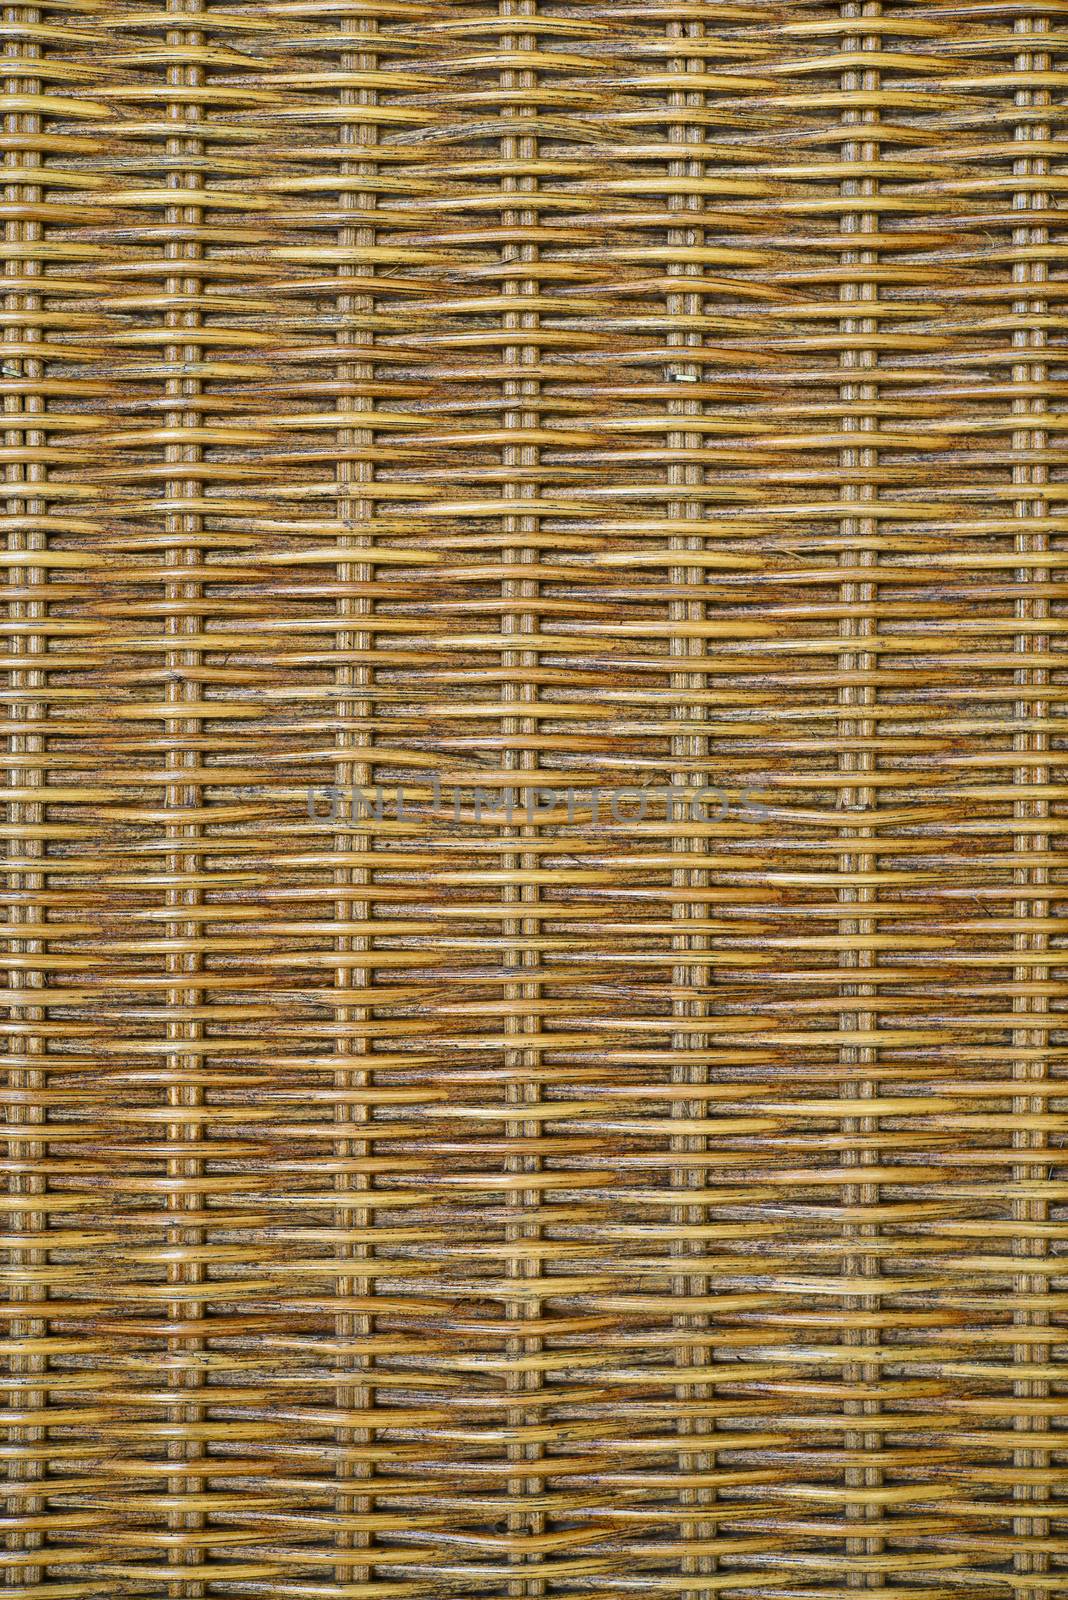 basket pattern by antpkr